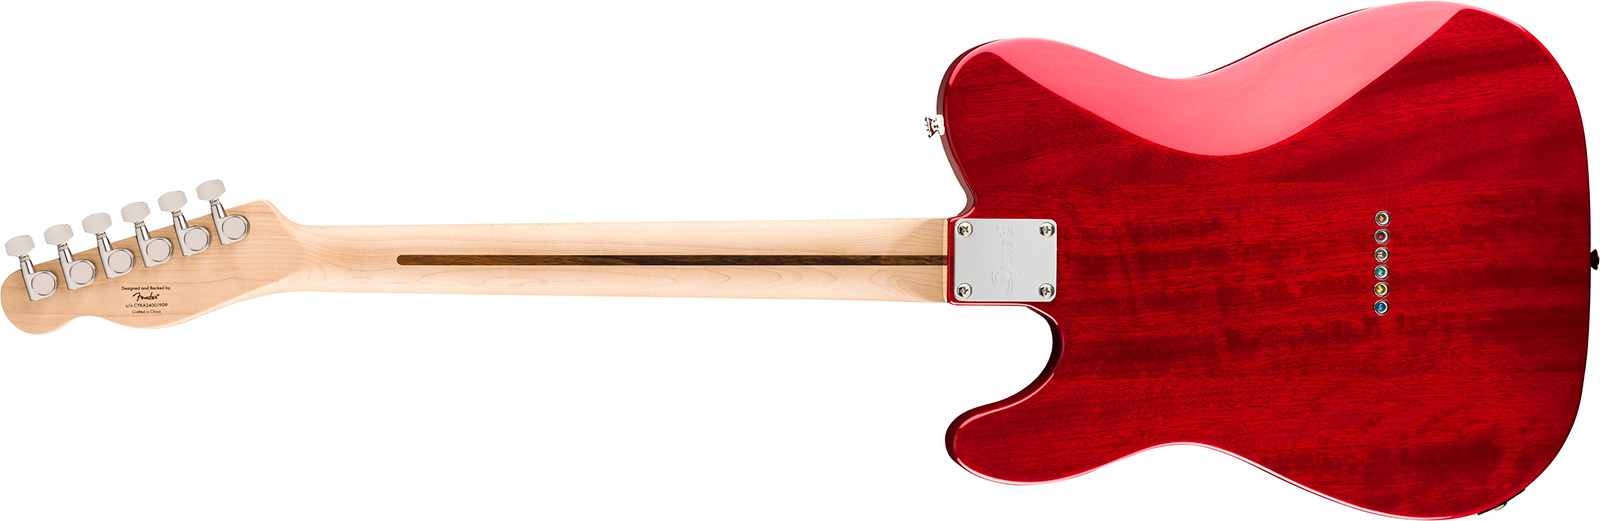 Squier Tele Fmt Sh Affinity Ht Lau - Crimson Red Transparent - Televorm elektrische gitaar - Variation 1